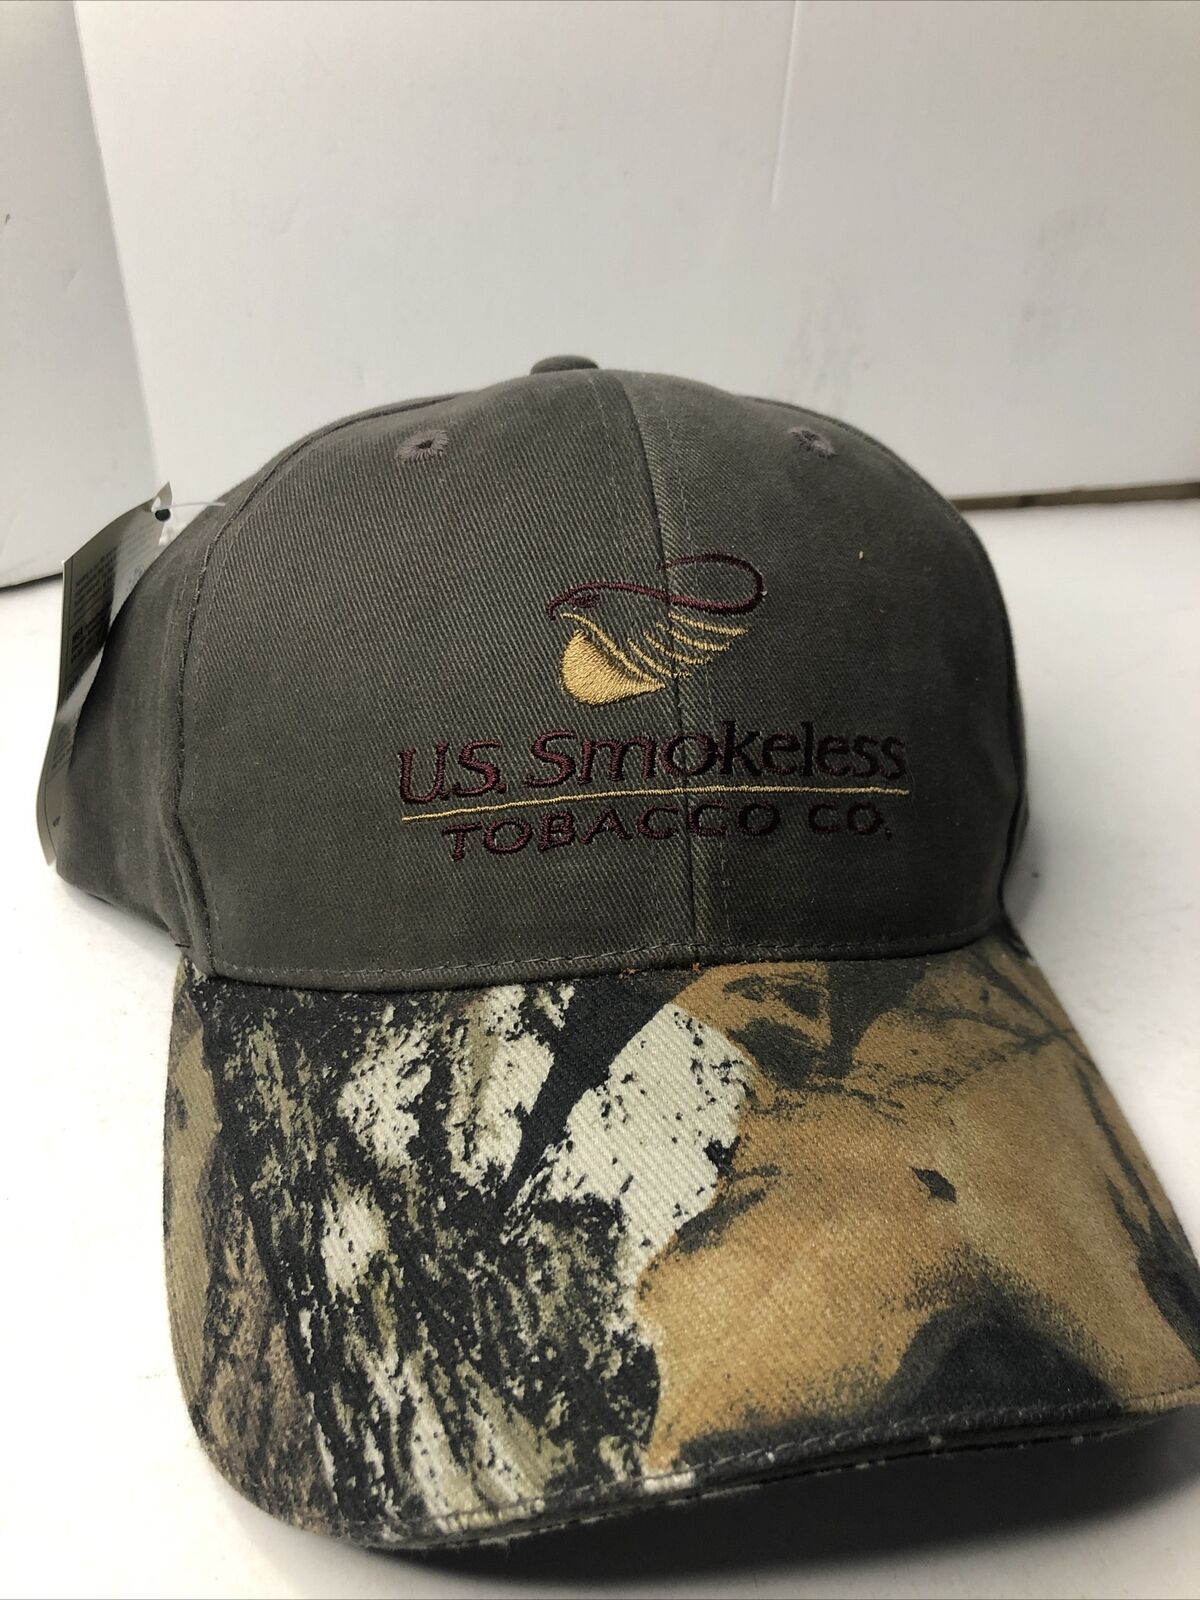 U.S. Smokeless Tobacco Company Mossy Oak Camo Baseball Adjustable Hat